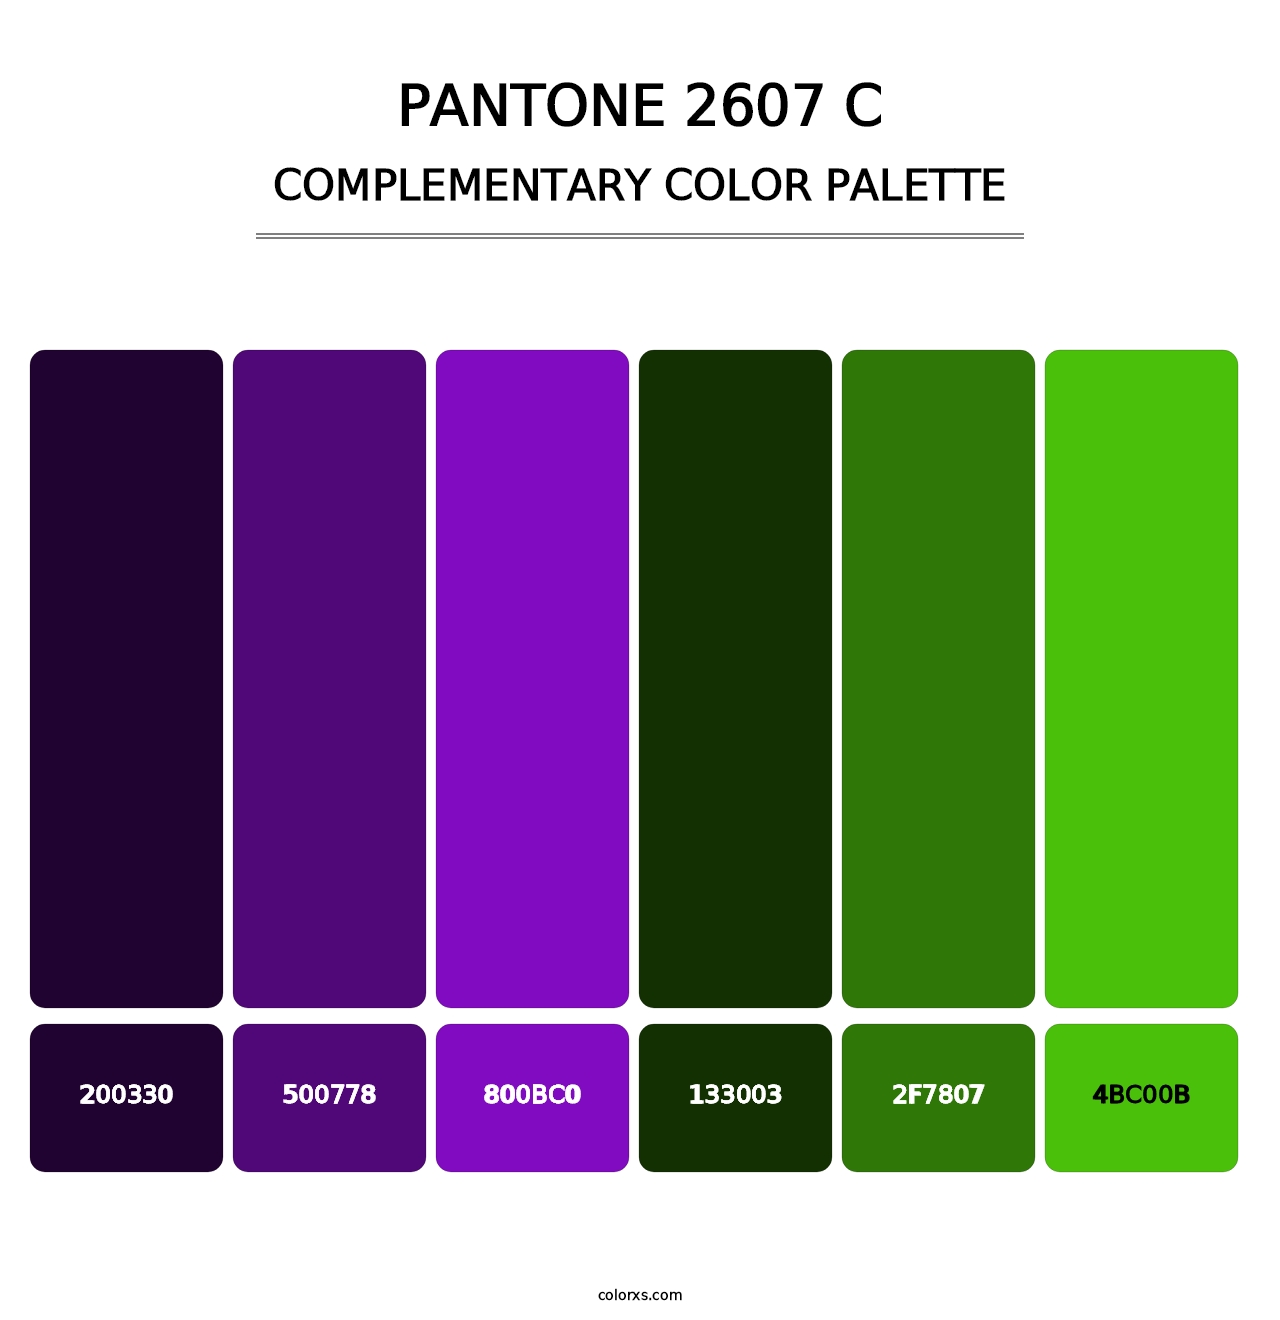 PANTONE 2607 C - Complementary Color Palette